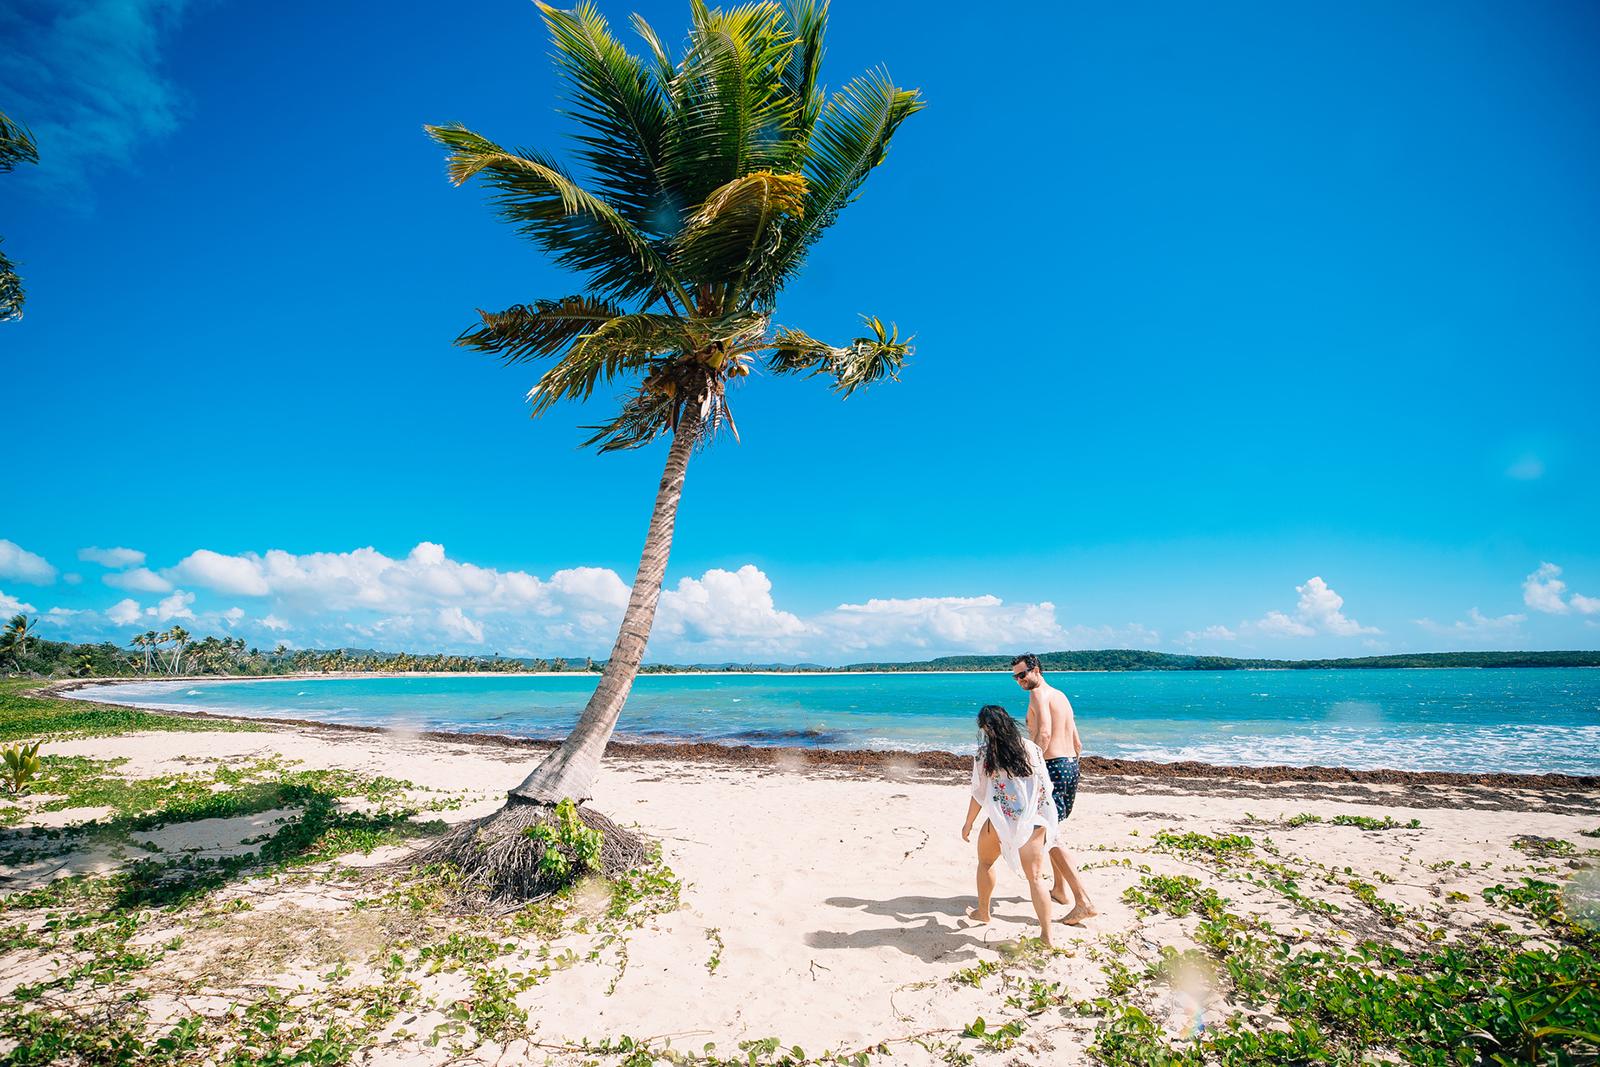 A couple strolling through the stunning Esperanza beach in Vieques.